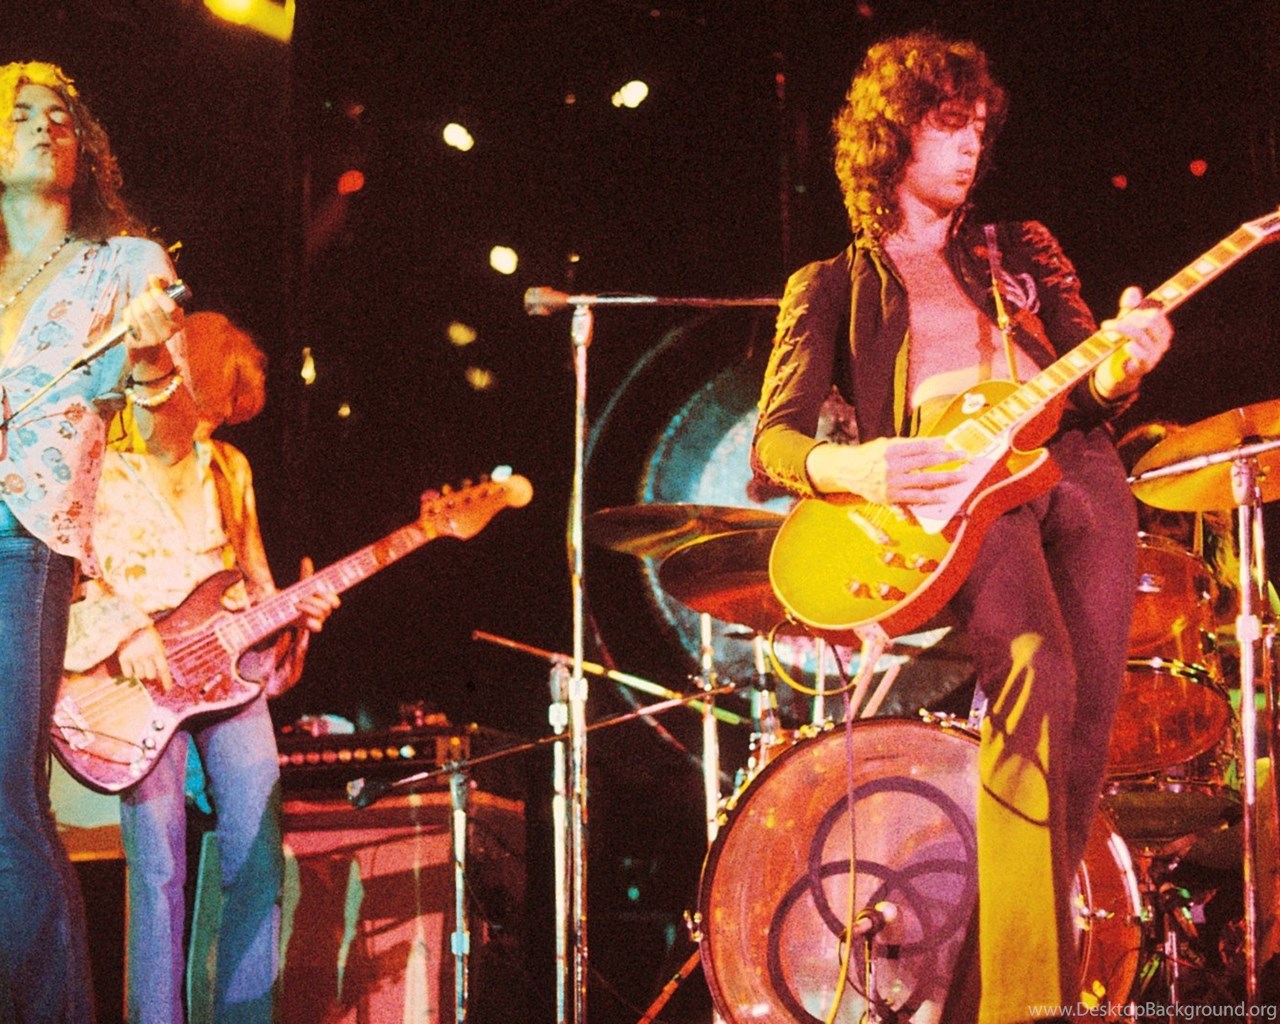 Rolling band. Группа led Zeppelin. Лед Зеппелин фото. Led Zeppelin фото группы. Лёд Зеппелин фото группы 70х на сцене.